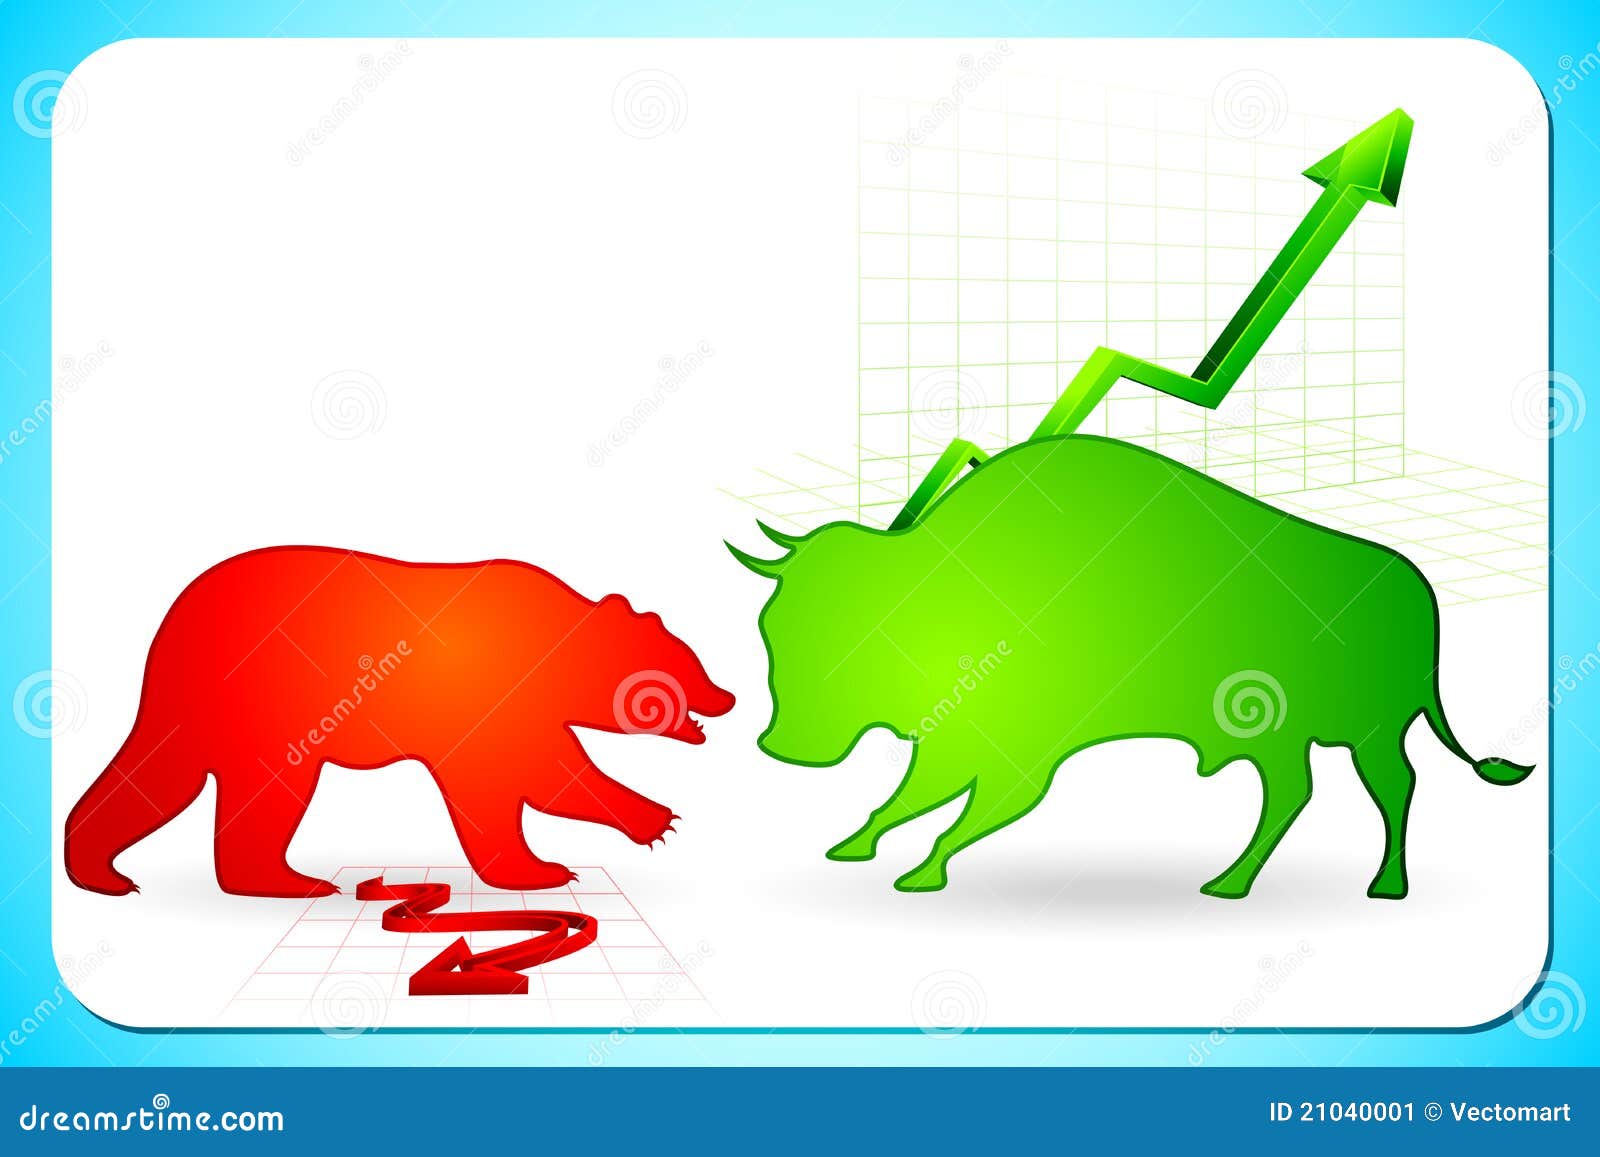 stock market bearish